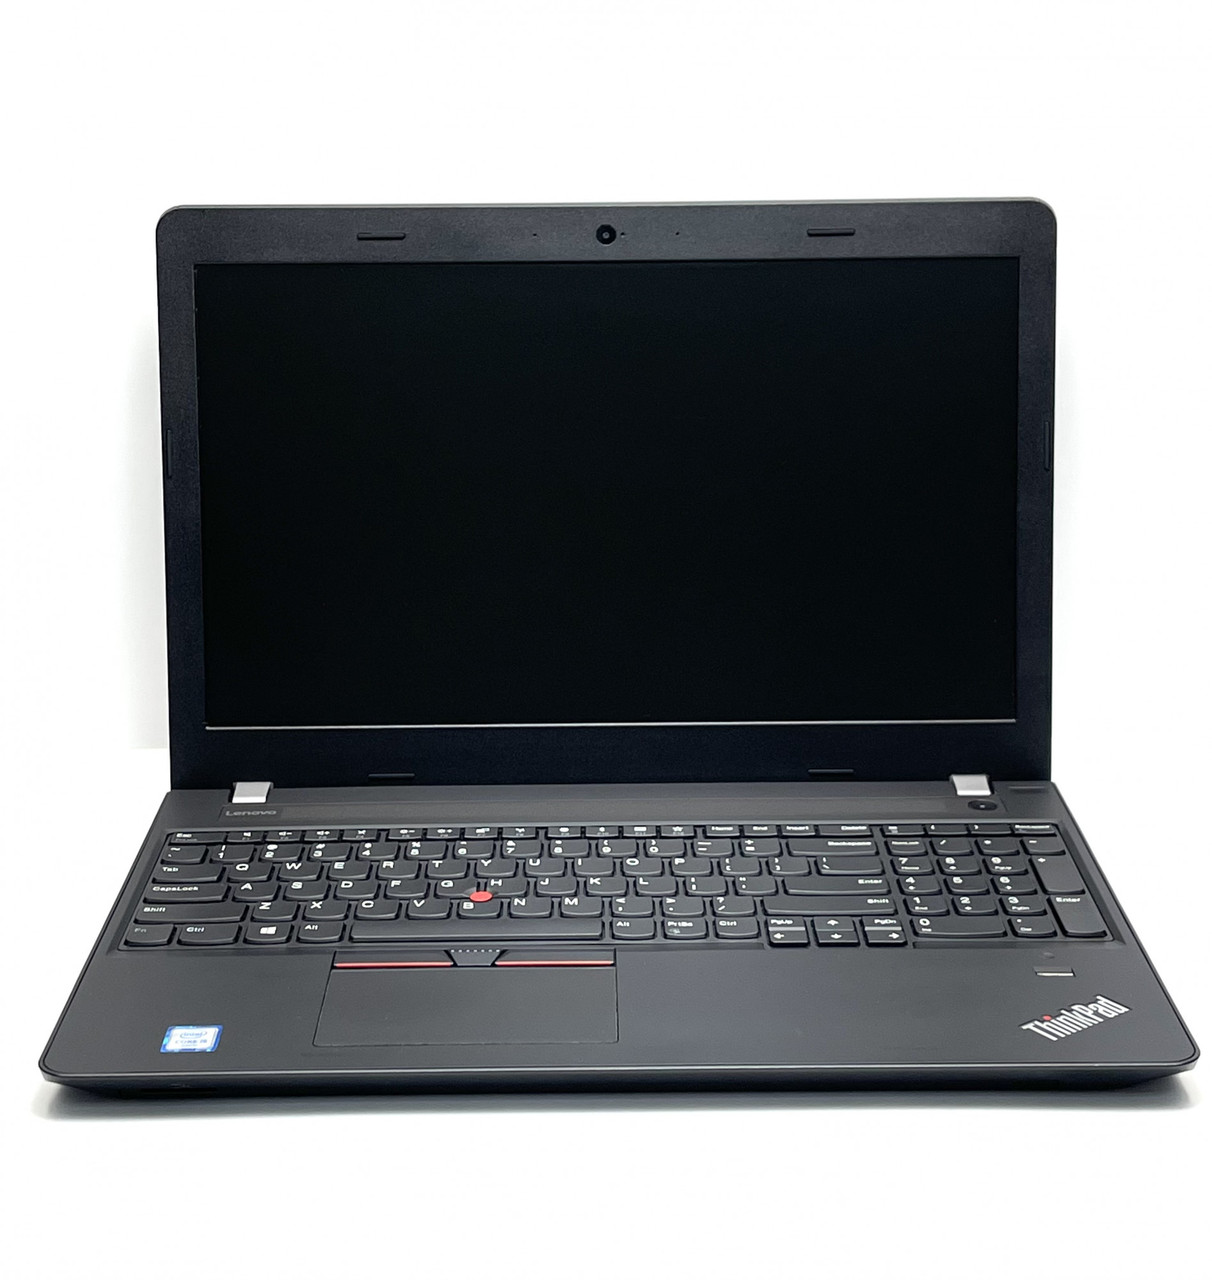 Ноутбук Lenovo ThinkPad E570 15,6 Intel Core i5 8 Гб 128 Гб Refurbished